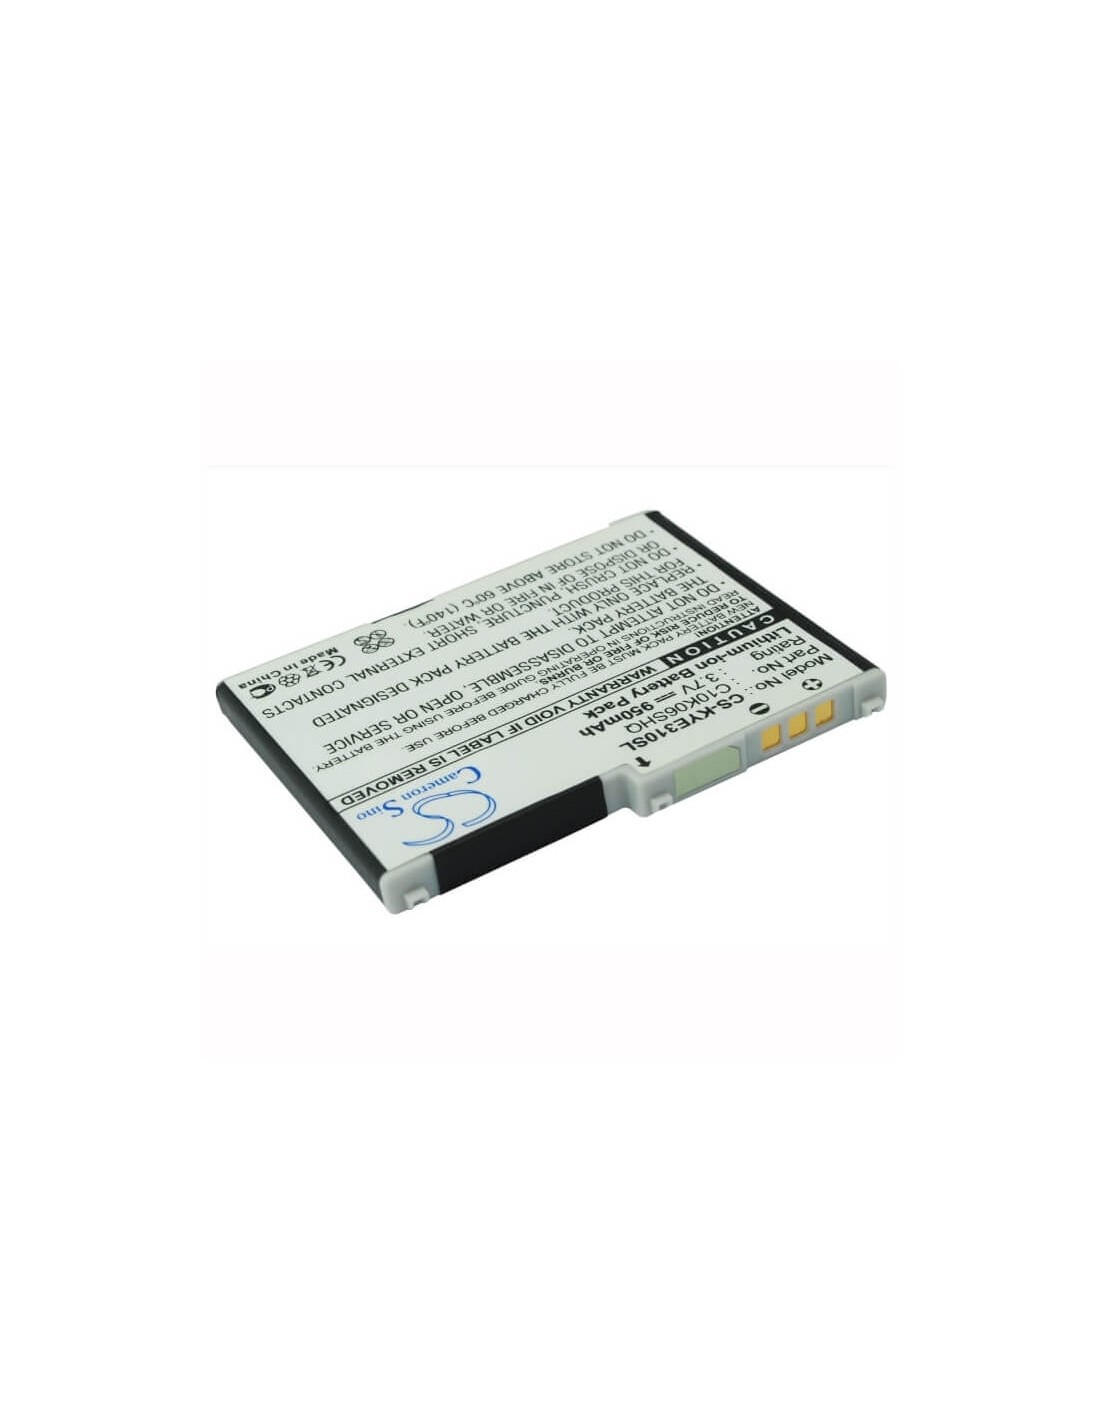 Battery for Kyocera E3100, RIO E3100, Loft S2300 3.7V, 950mAh - 3.52Wh